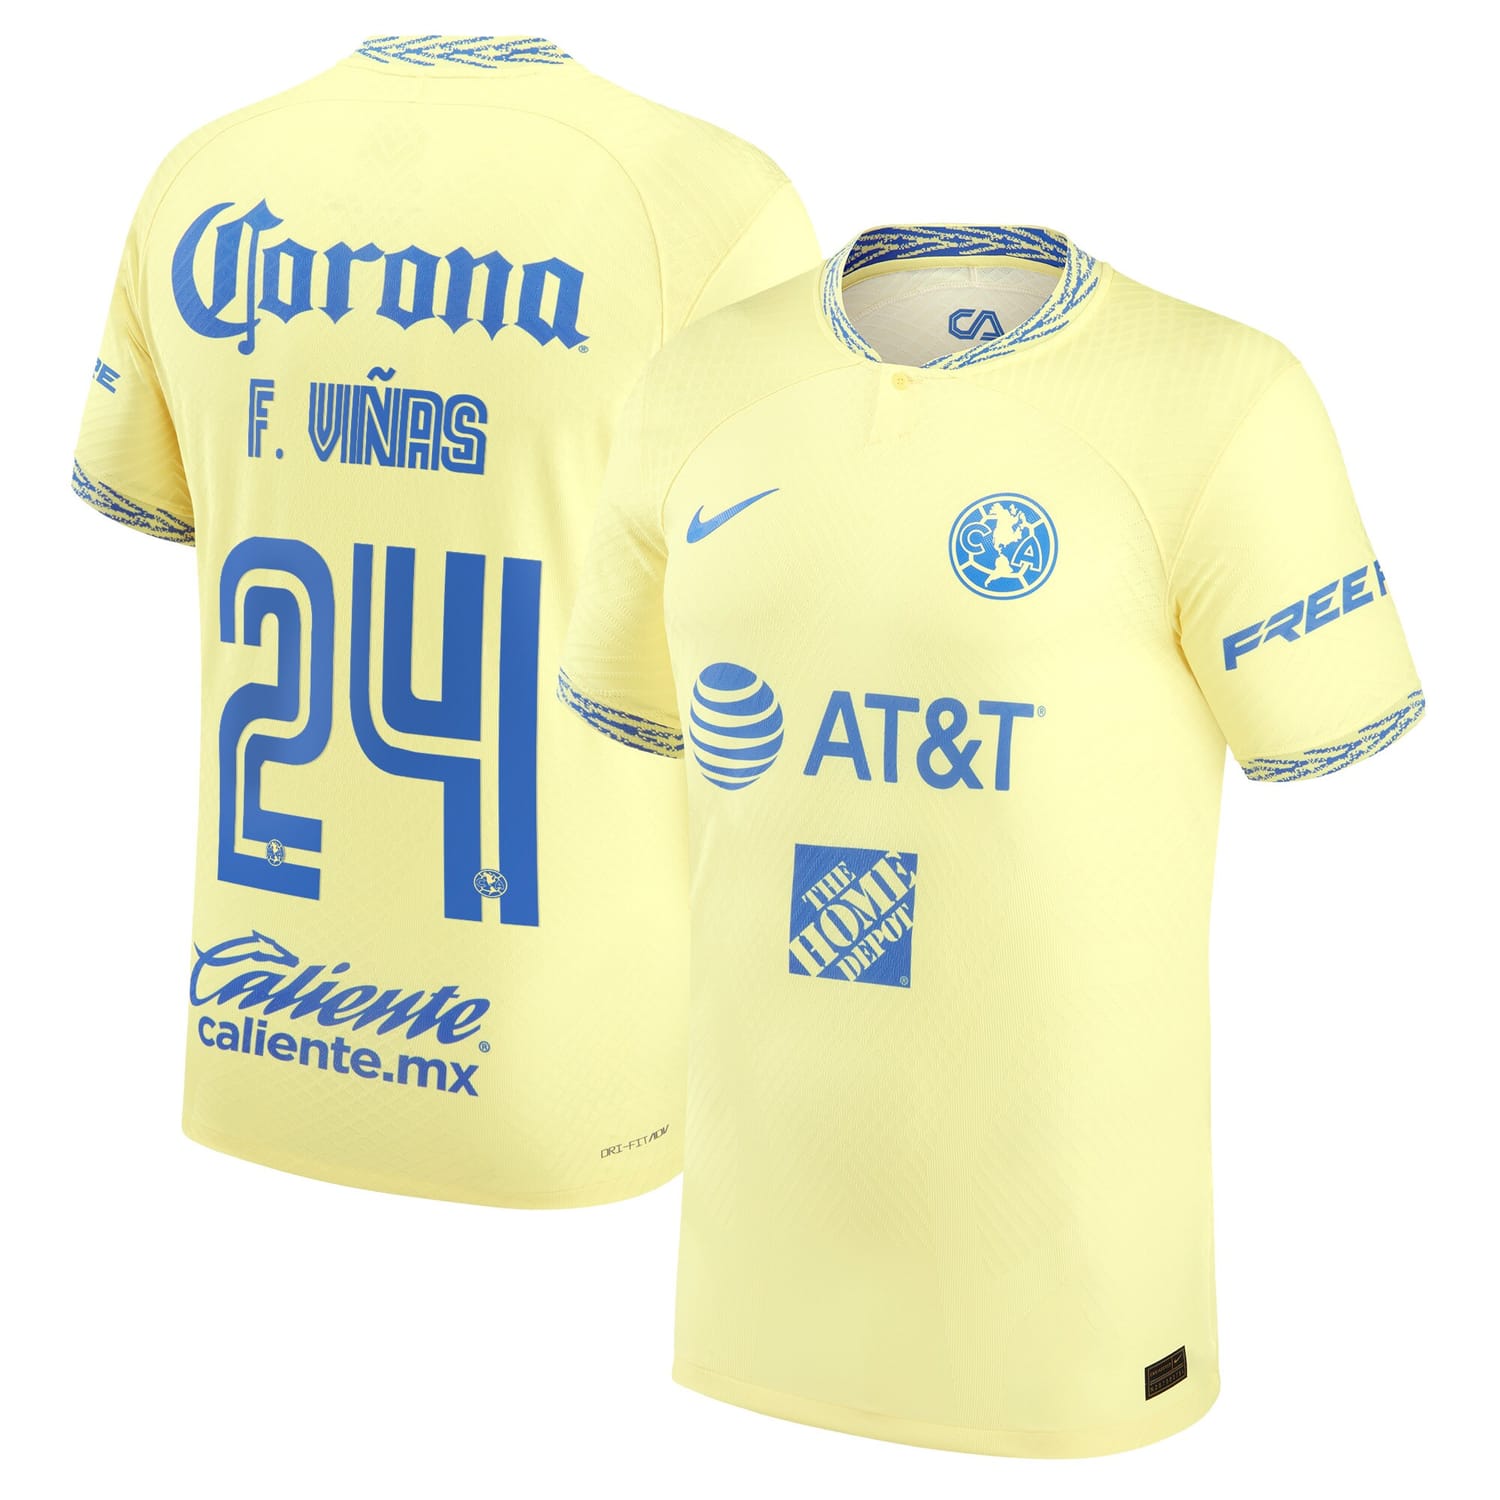 Liga MX Club America Home Authentic Jersey Shirt Yellow 2022-23 player Federico Viñas printing for Men